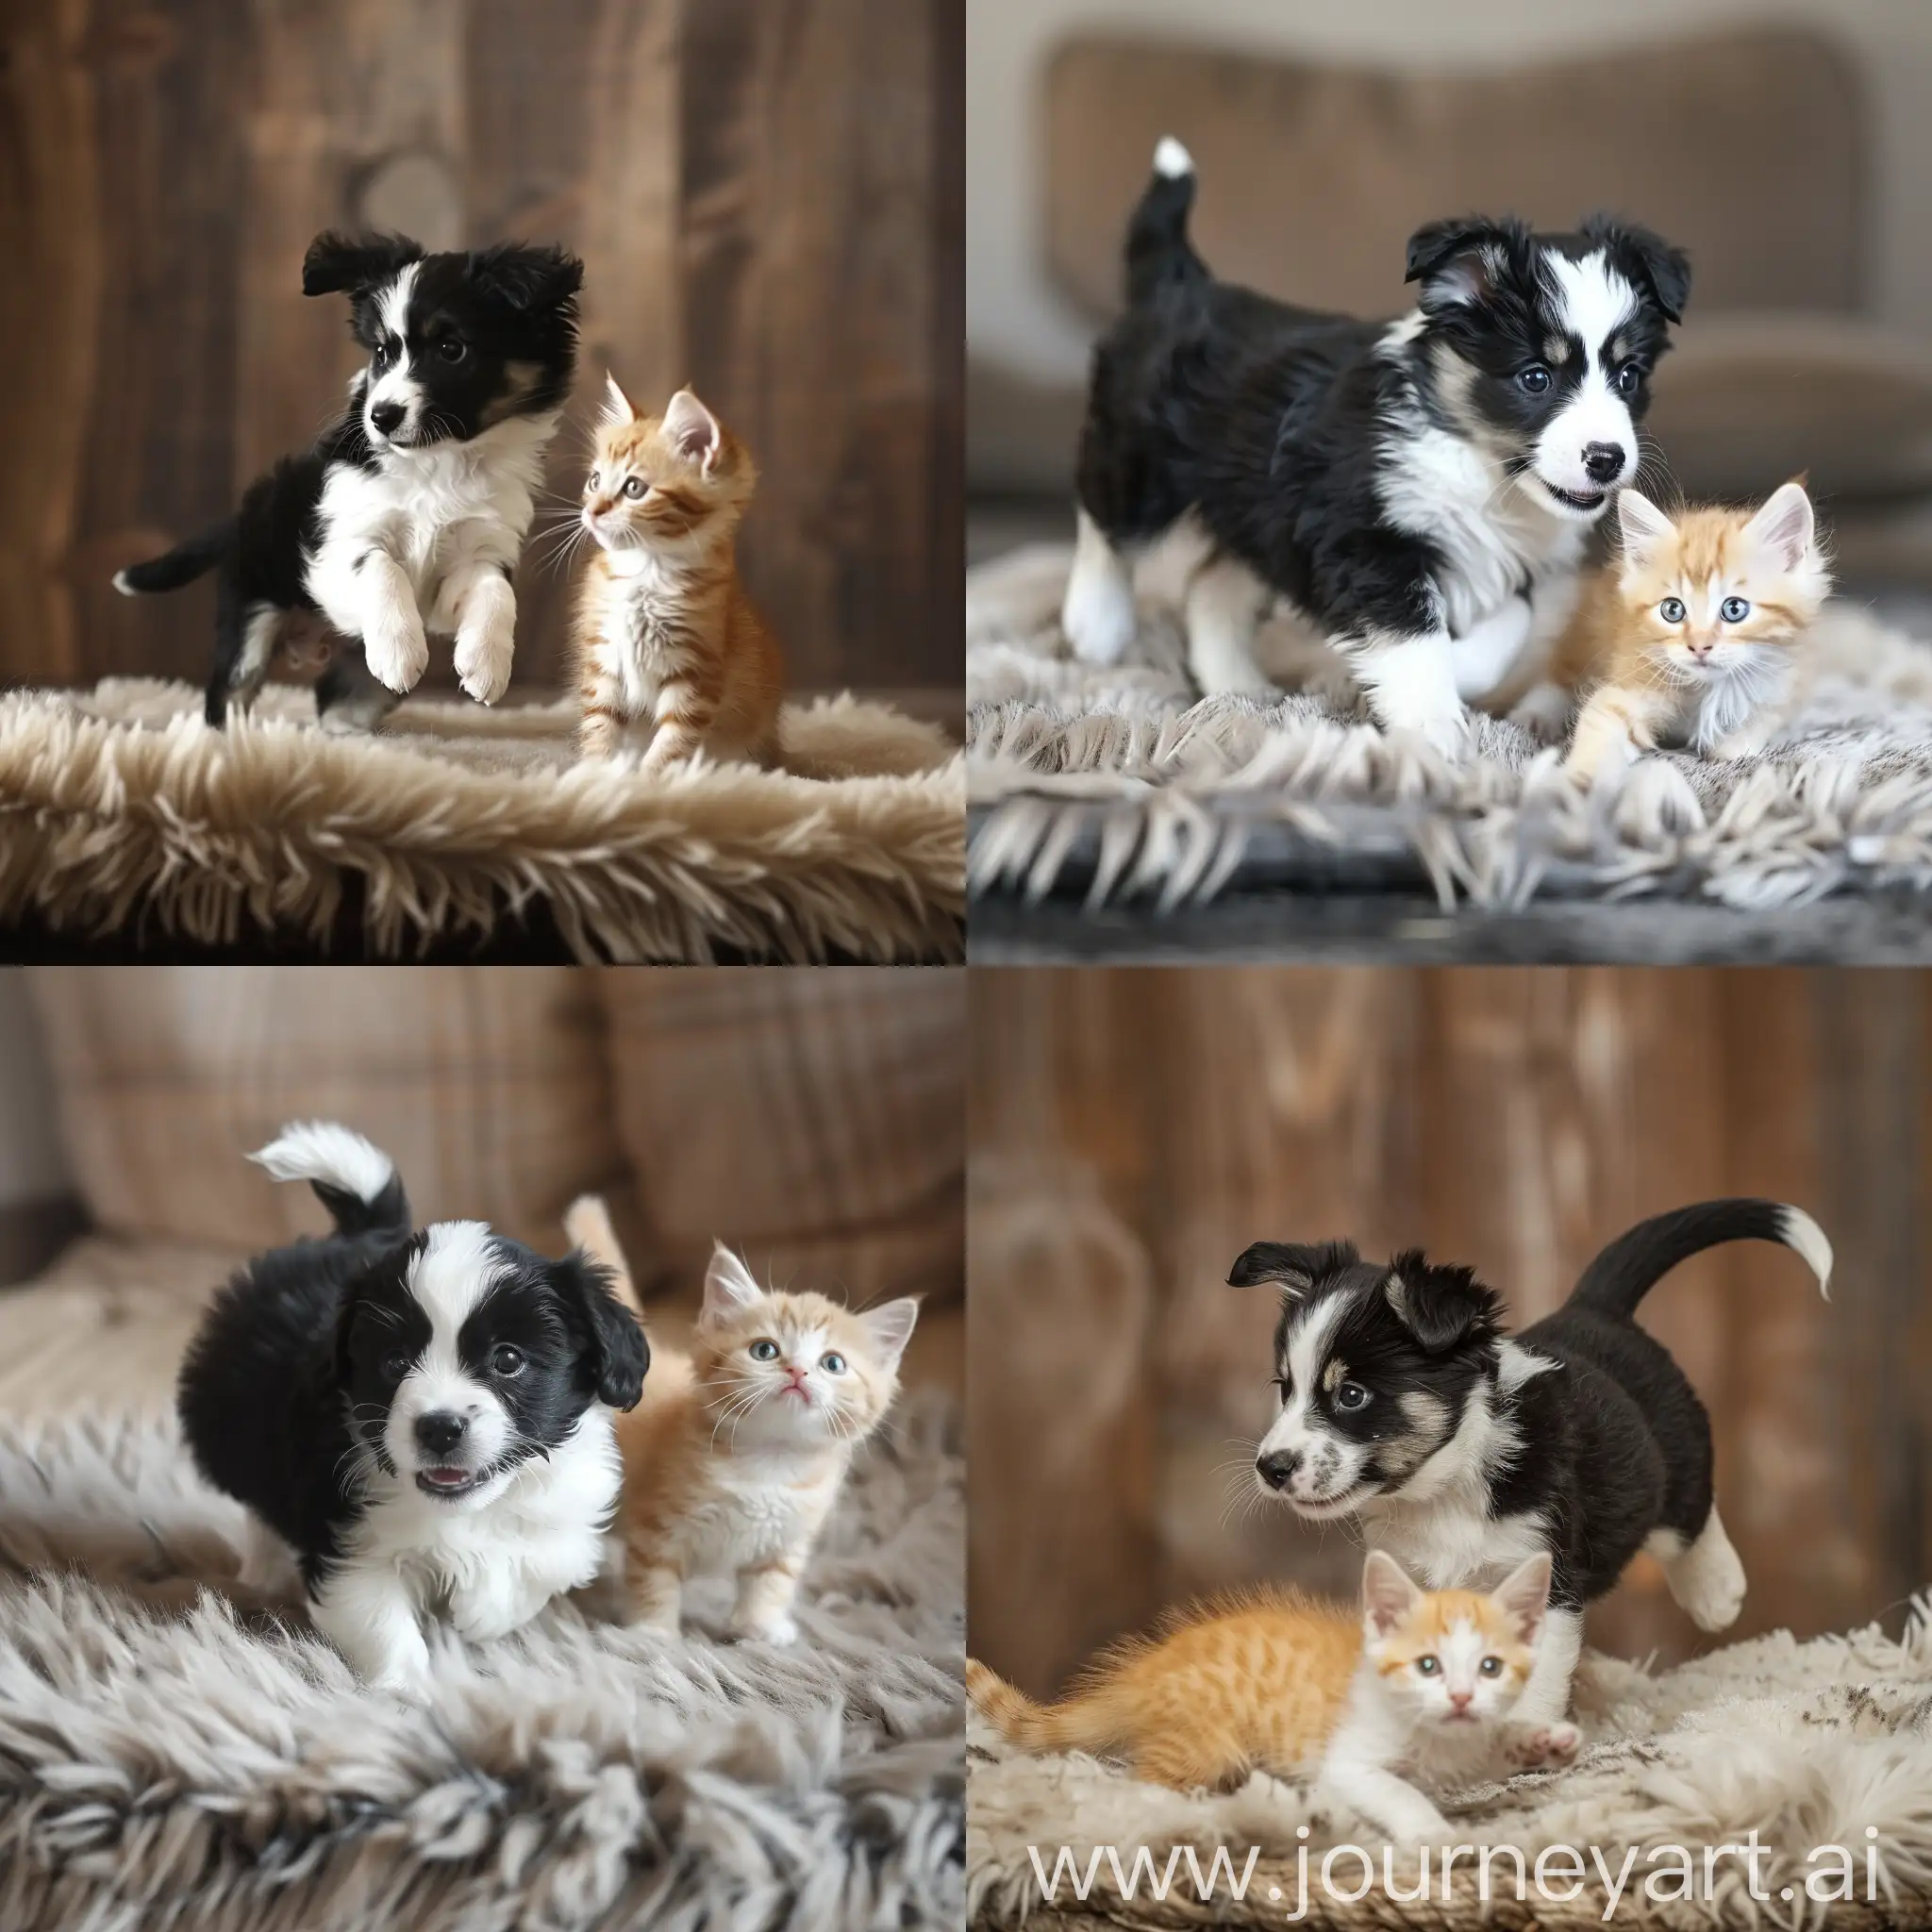 Playful-BlackandWhite-Puppy-and-YellowandWhite-Kitten-on-Furry-Mat